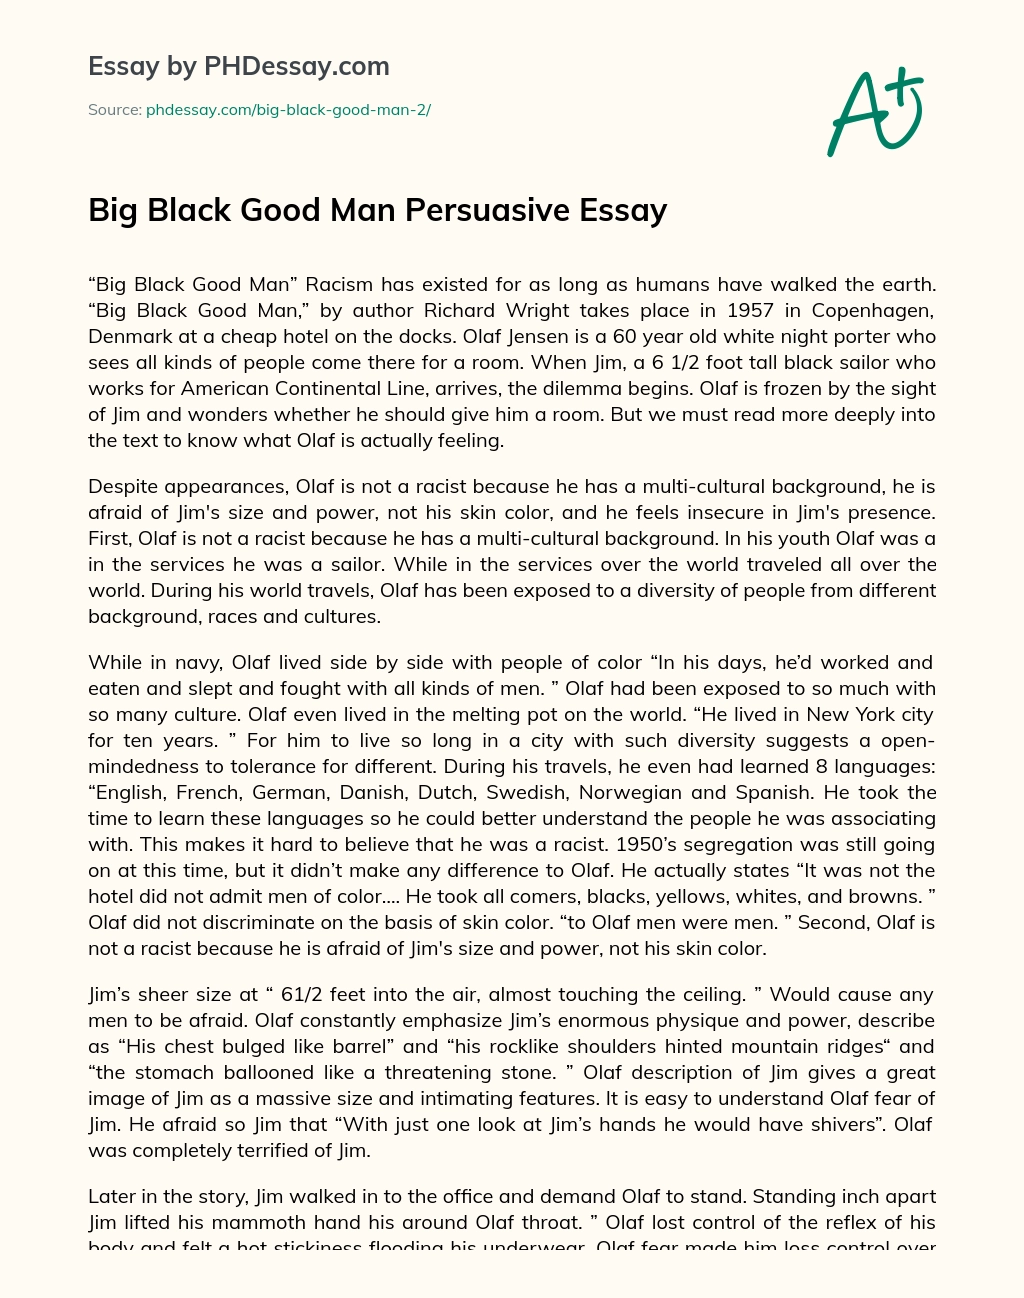 Big Black Good Man Persuasive Essay essay